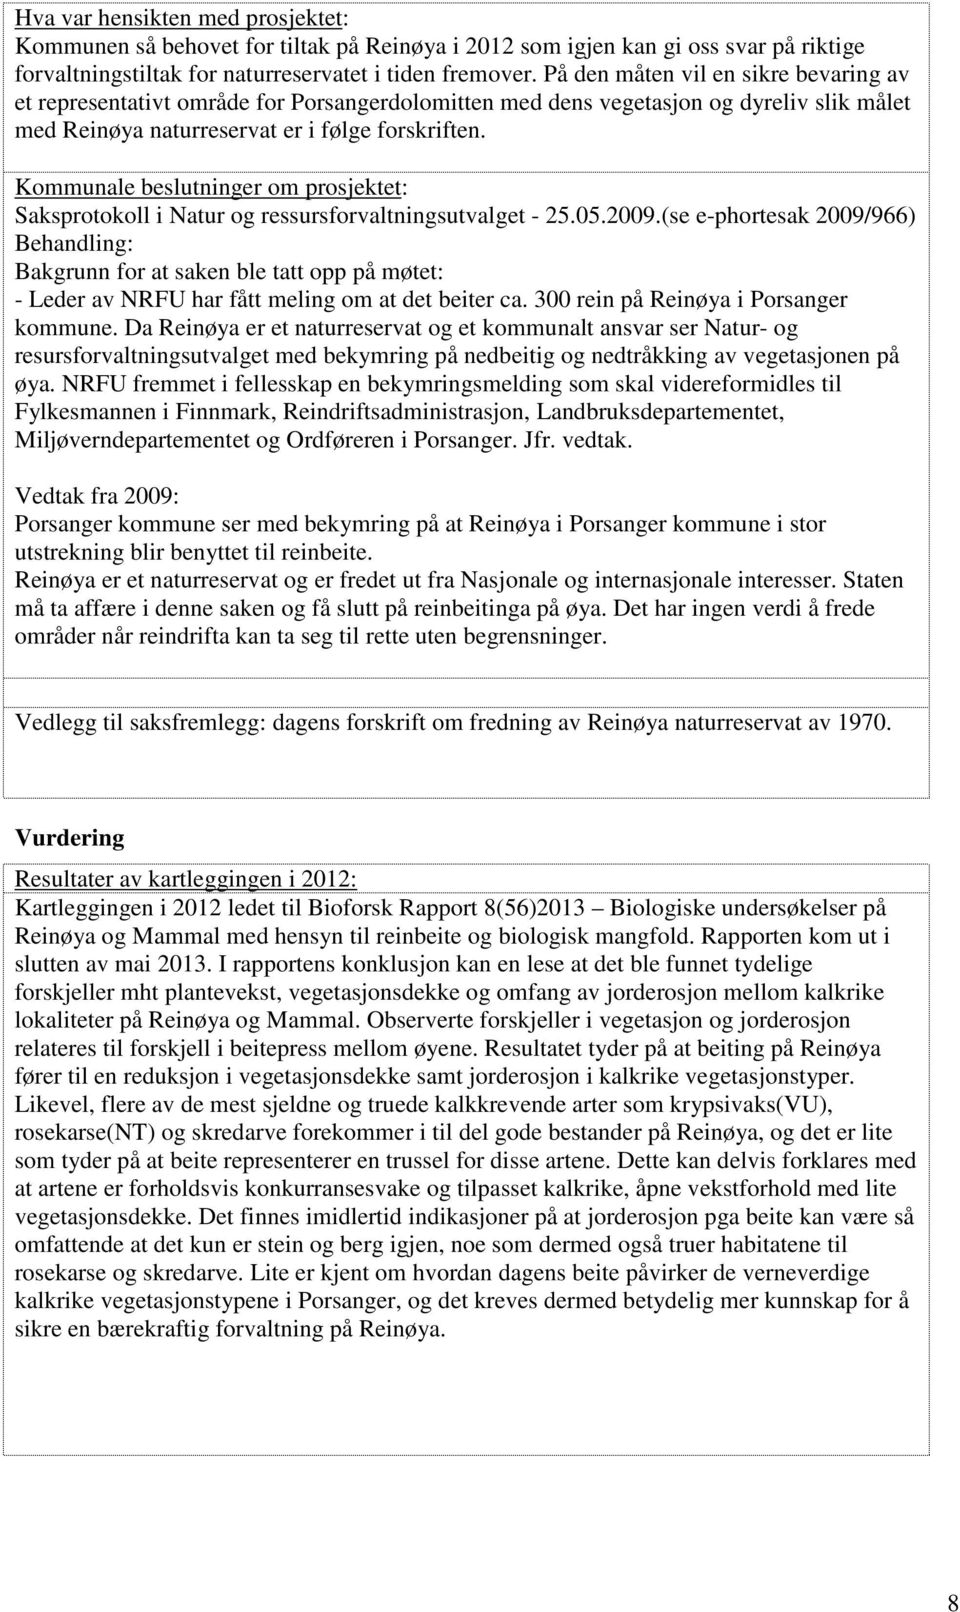 Kommunale beslutninger om prosjektet: Saksprotokoll i Natur og ressursforvaltningsutvalget - 25.05.2009.